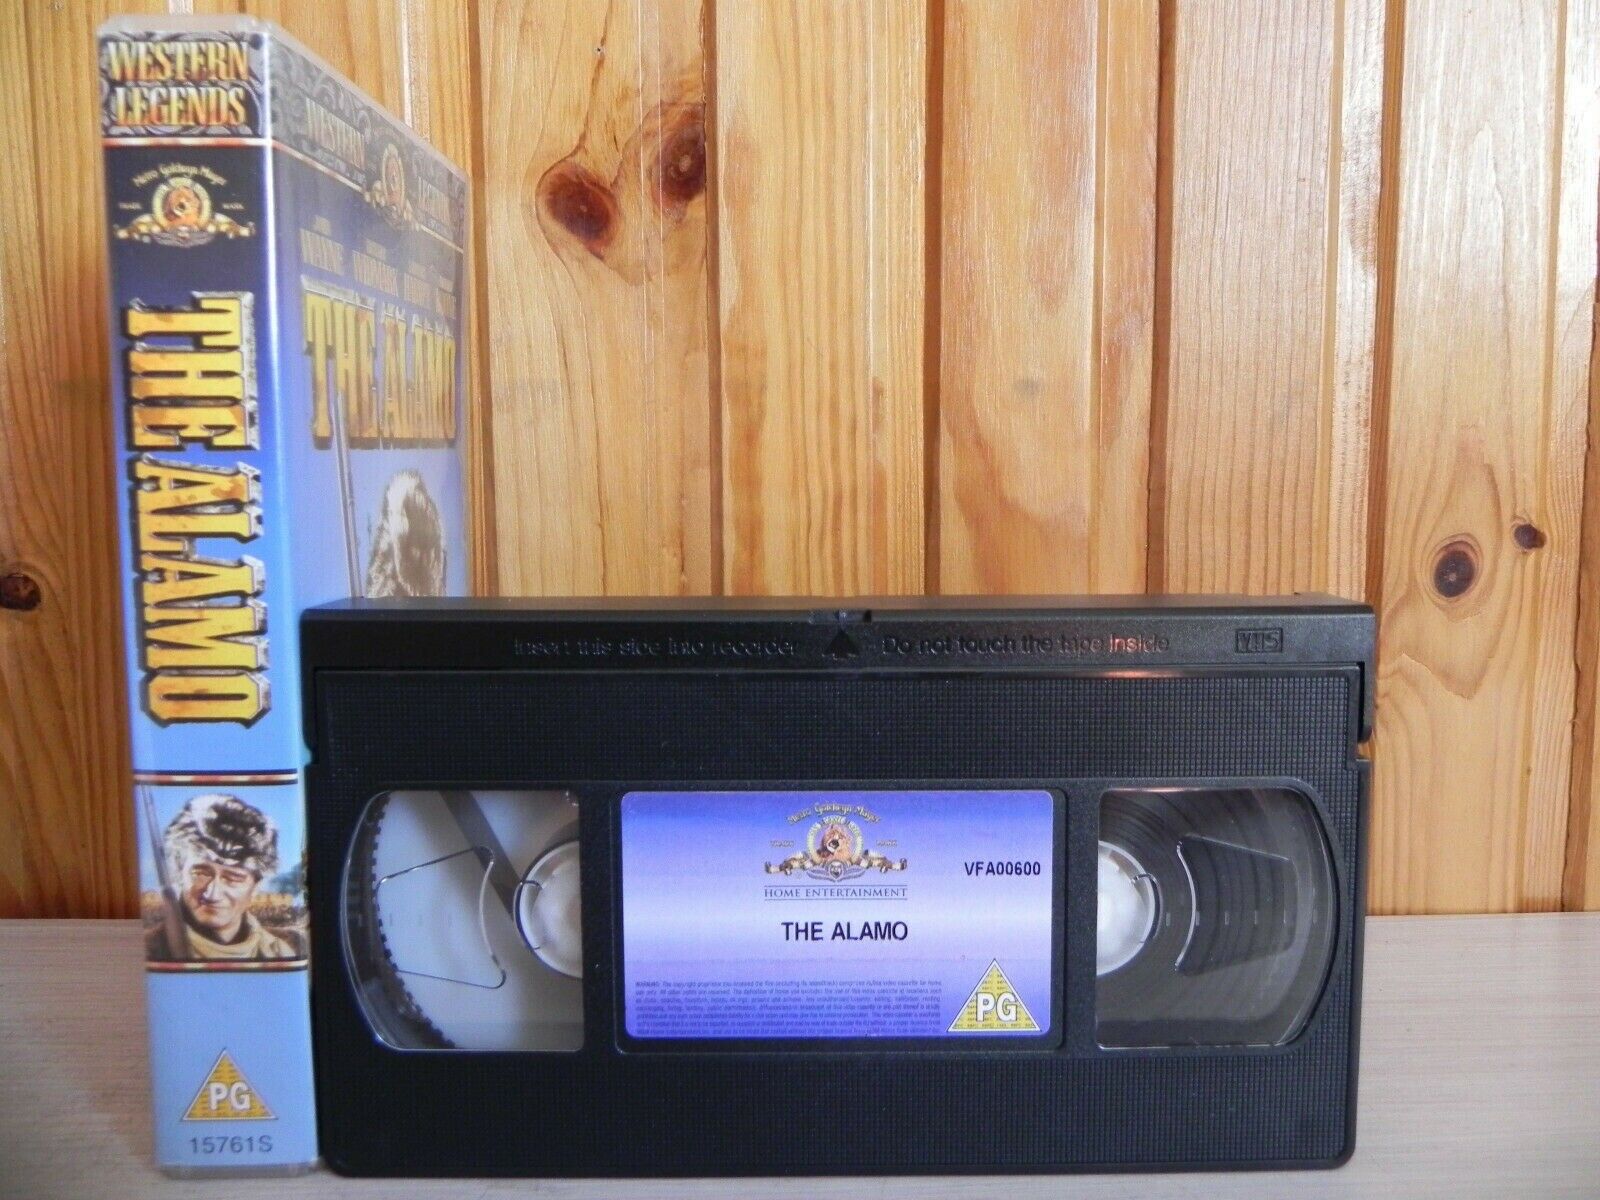 The Alamo - Metro Goldwyn - Western Legends - John Wayne - Richard Widmark - VHS-